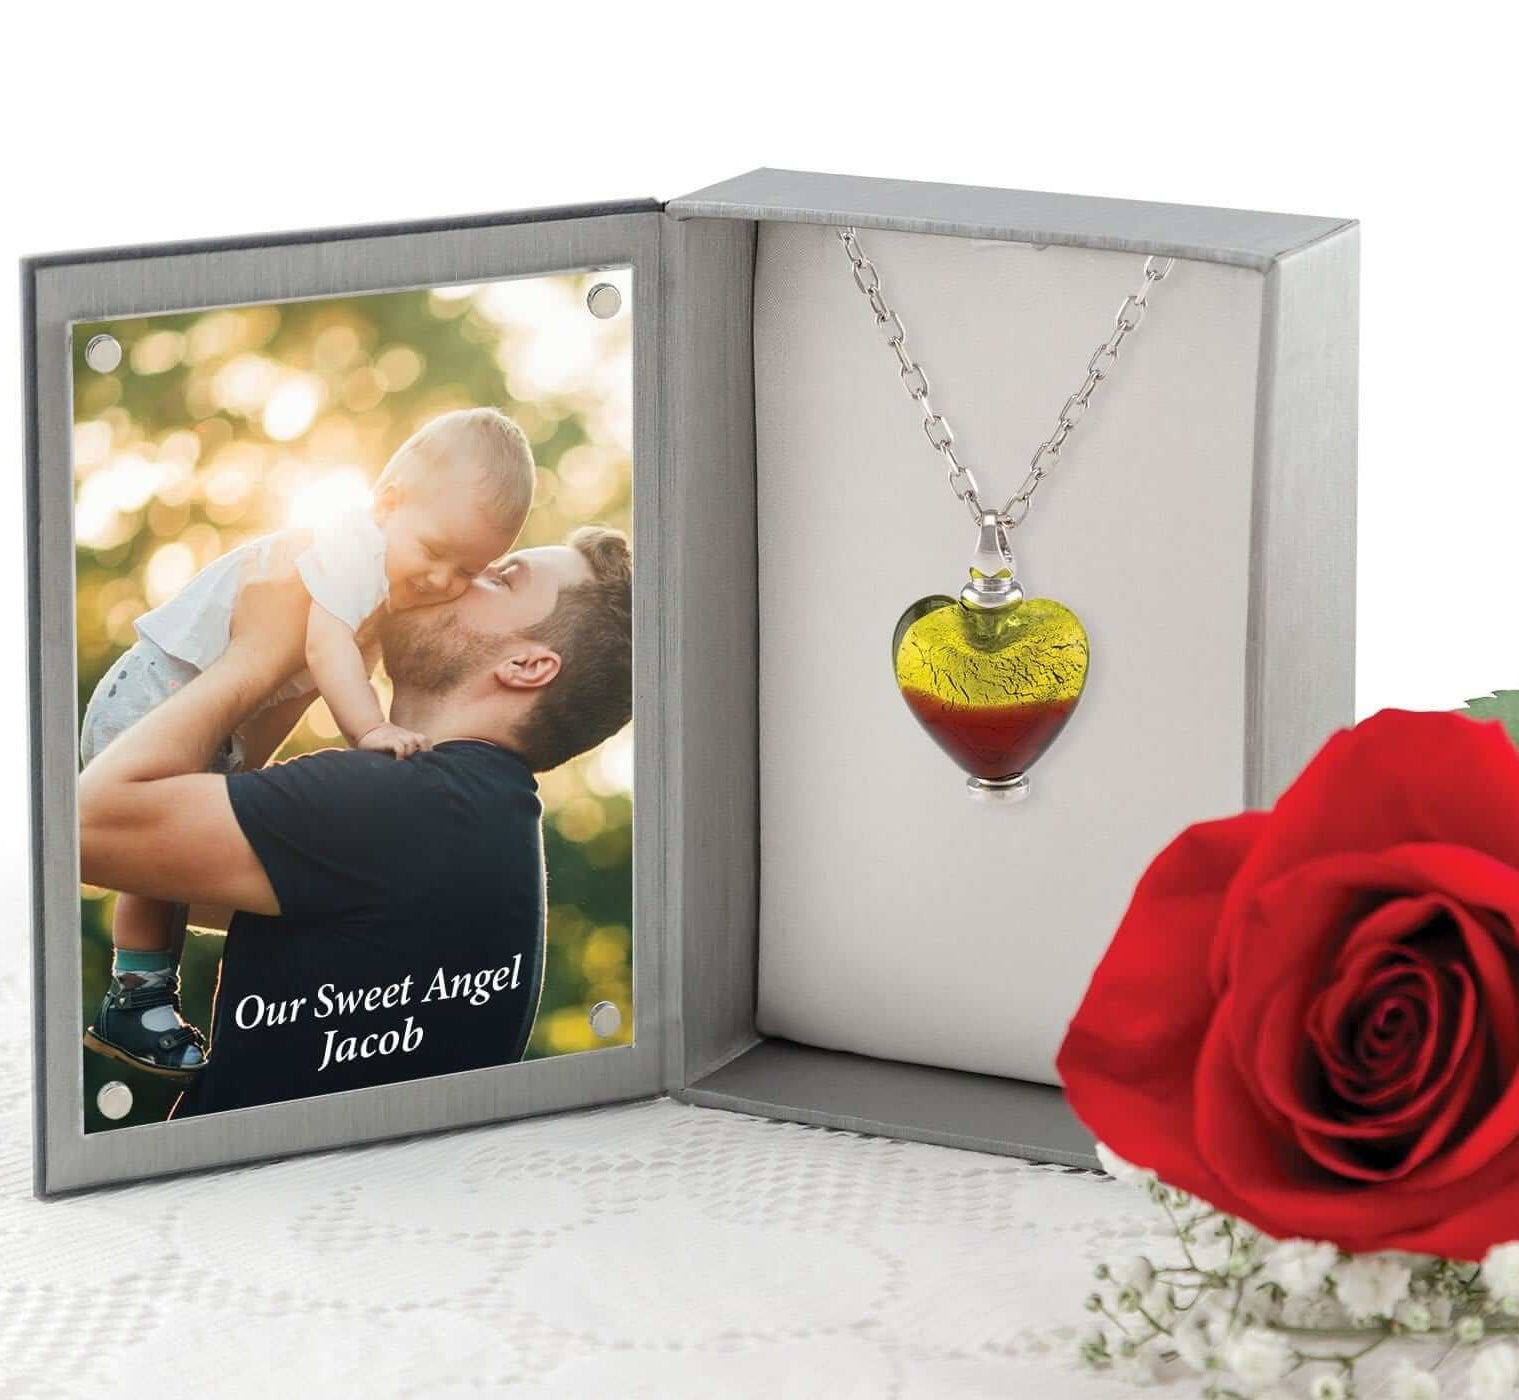 Cara Keepsakes Murano Glass Heart Urn - 'Guiding Light' in jewelry box